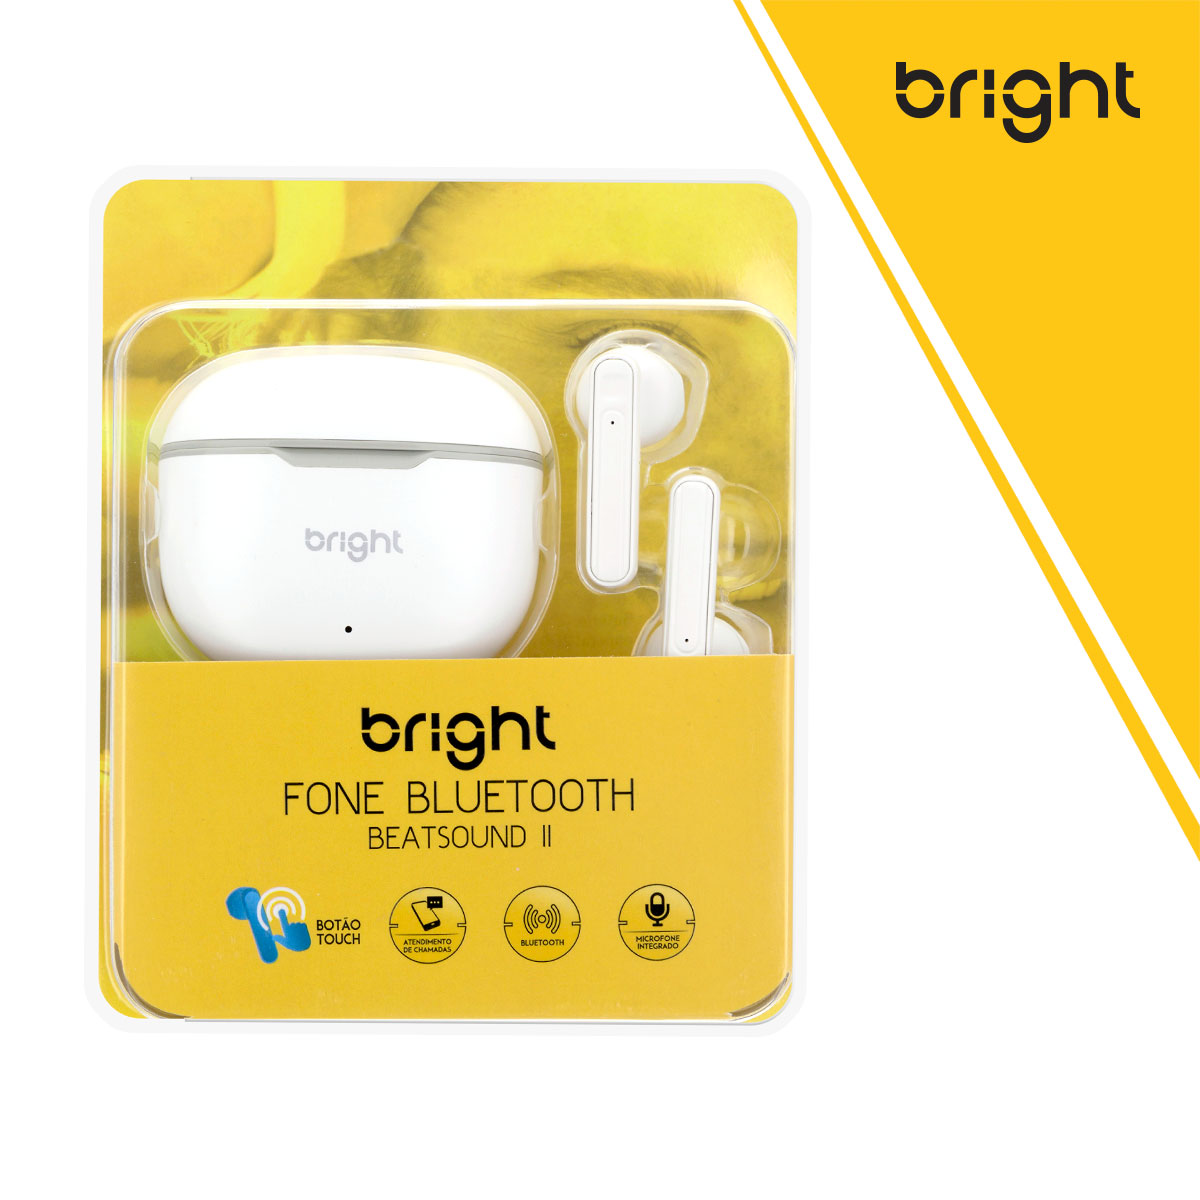 Fone de Ouvido Bluetooth Beatsound II Bright FN565  - BRIGHT